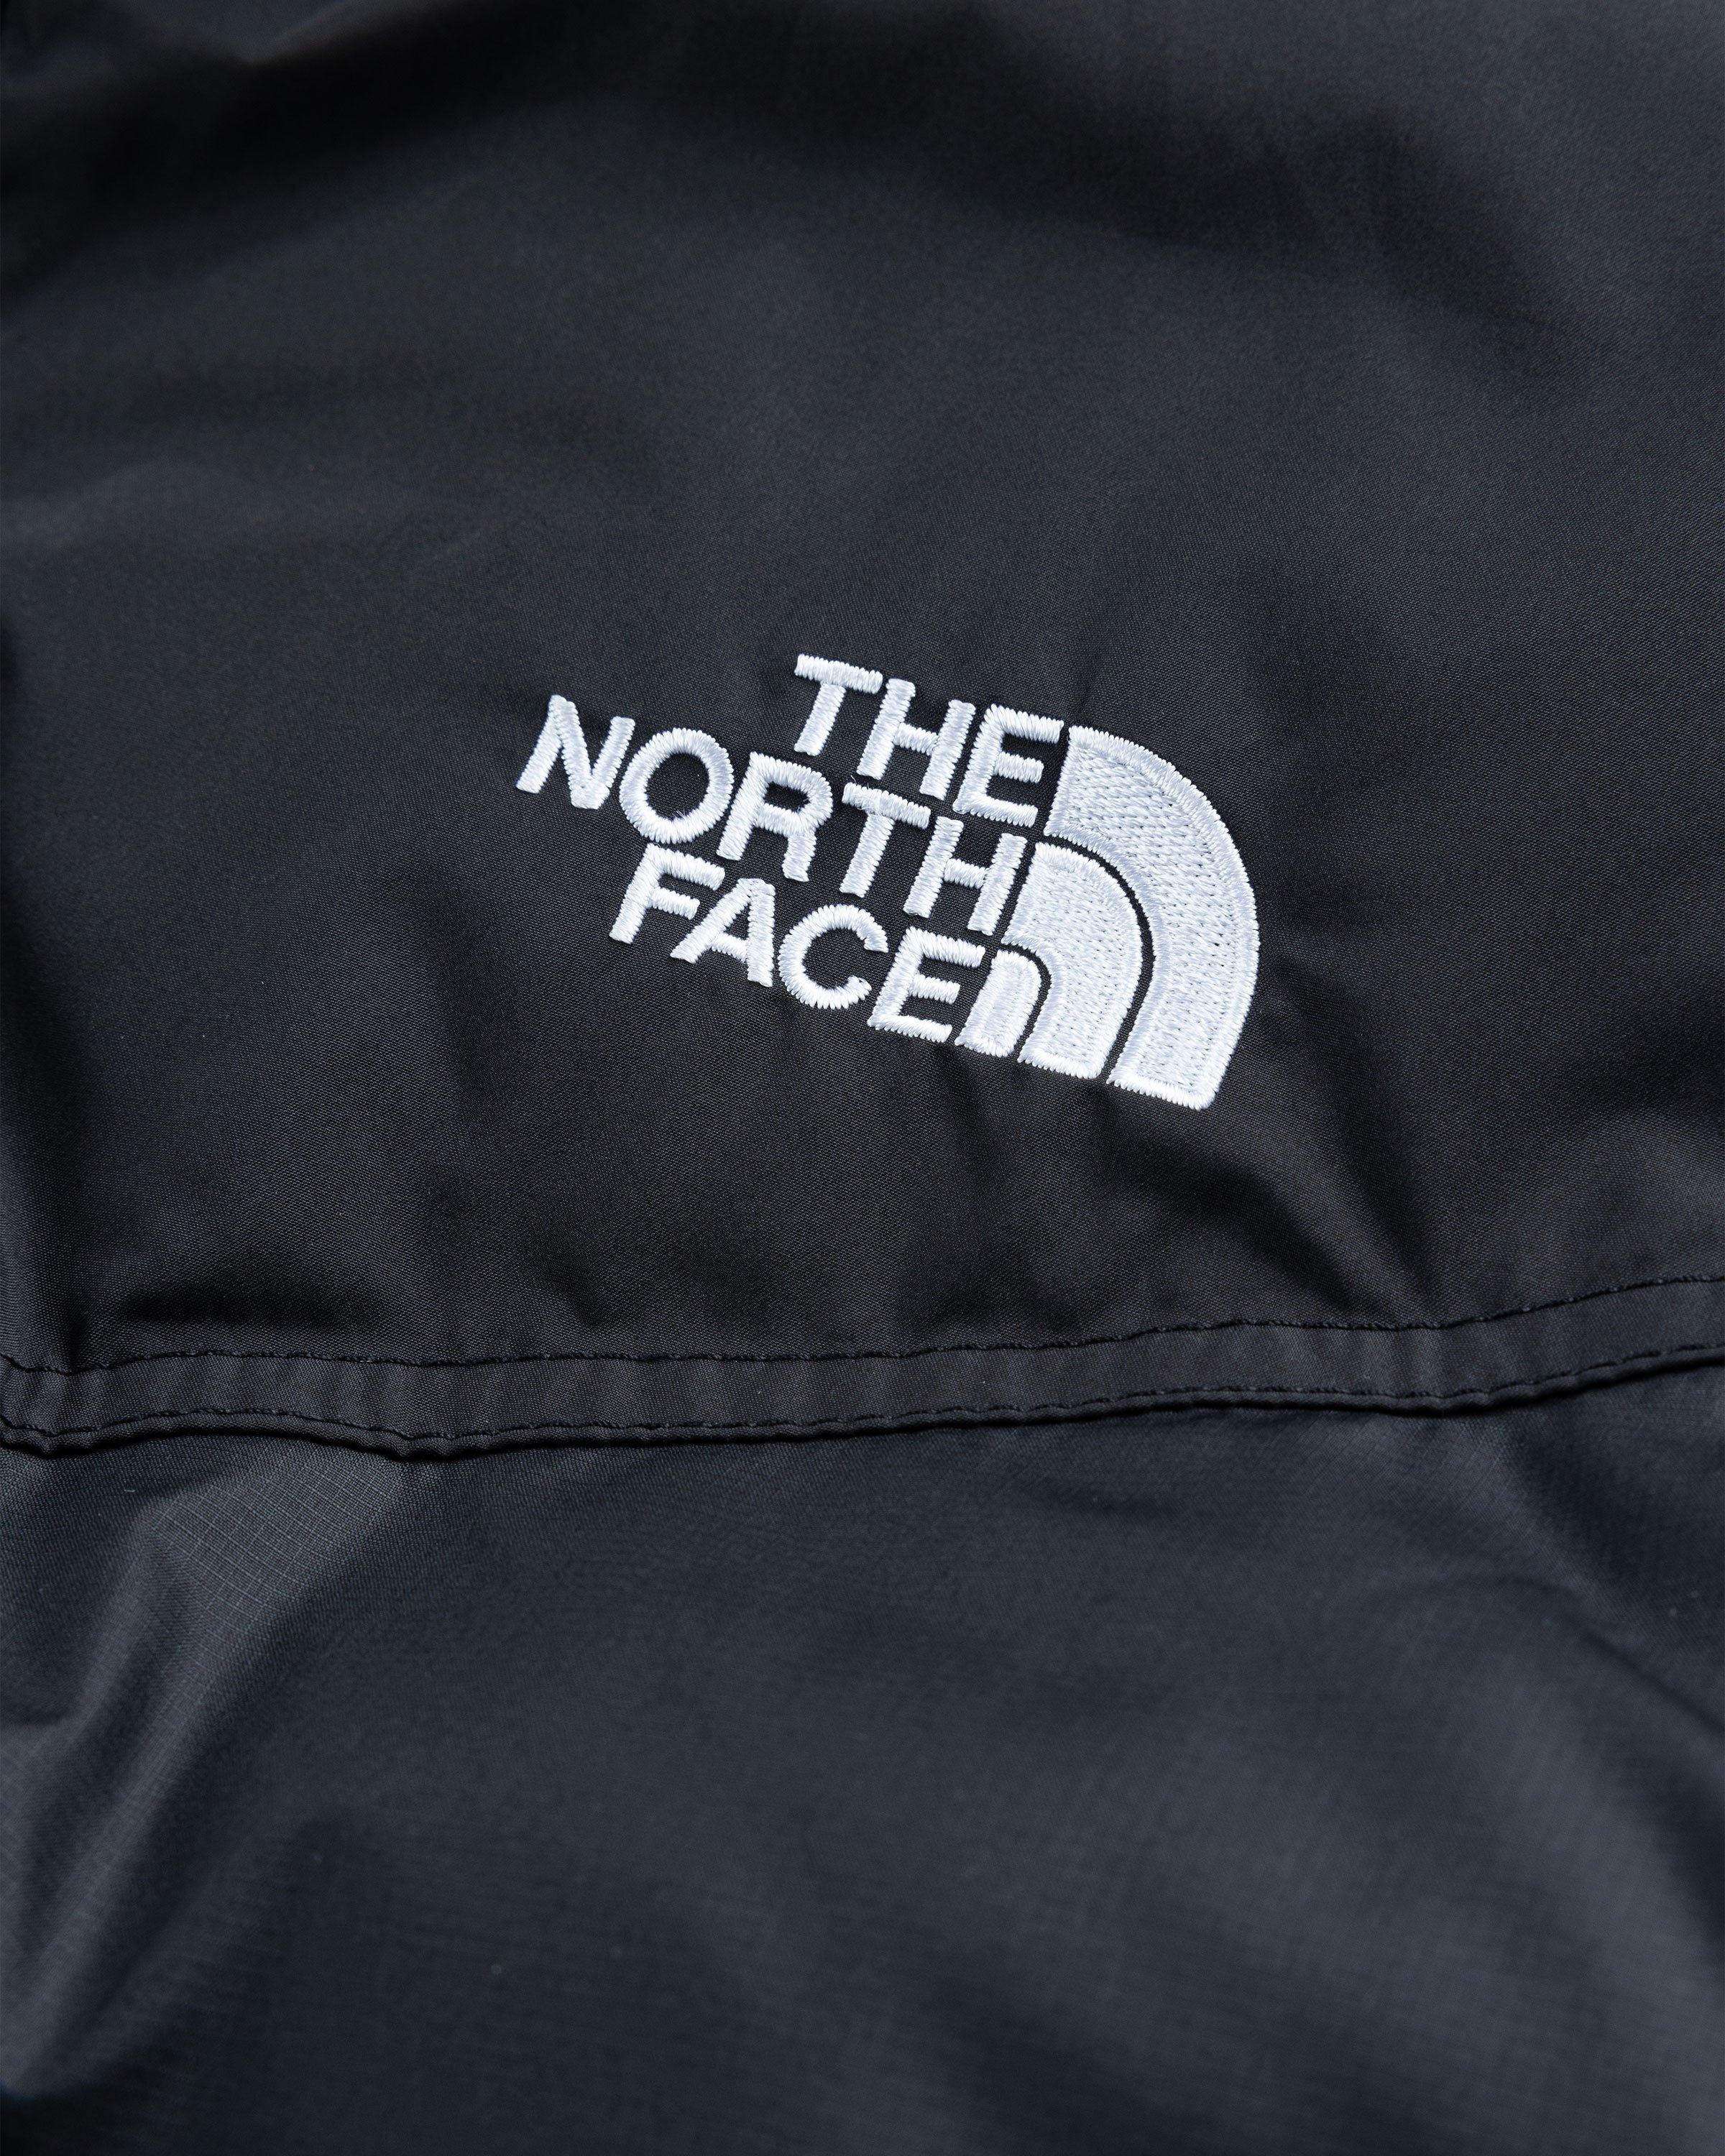 The North Face – Saikuru Jacket TNF Black - Outerwear - Black - Image 6